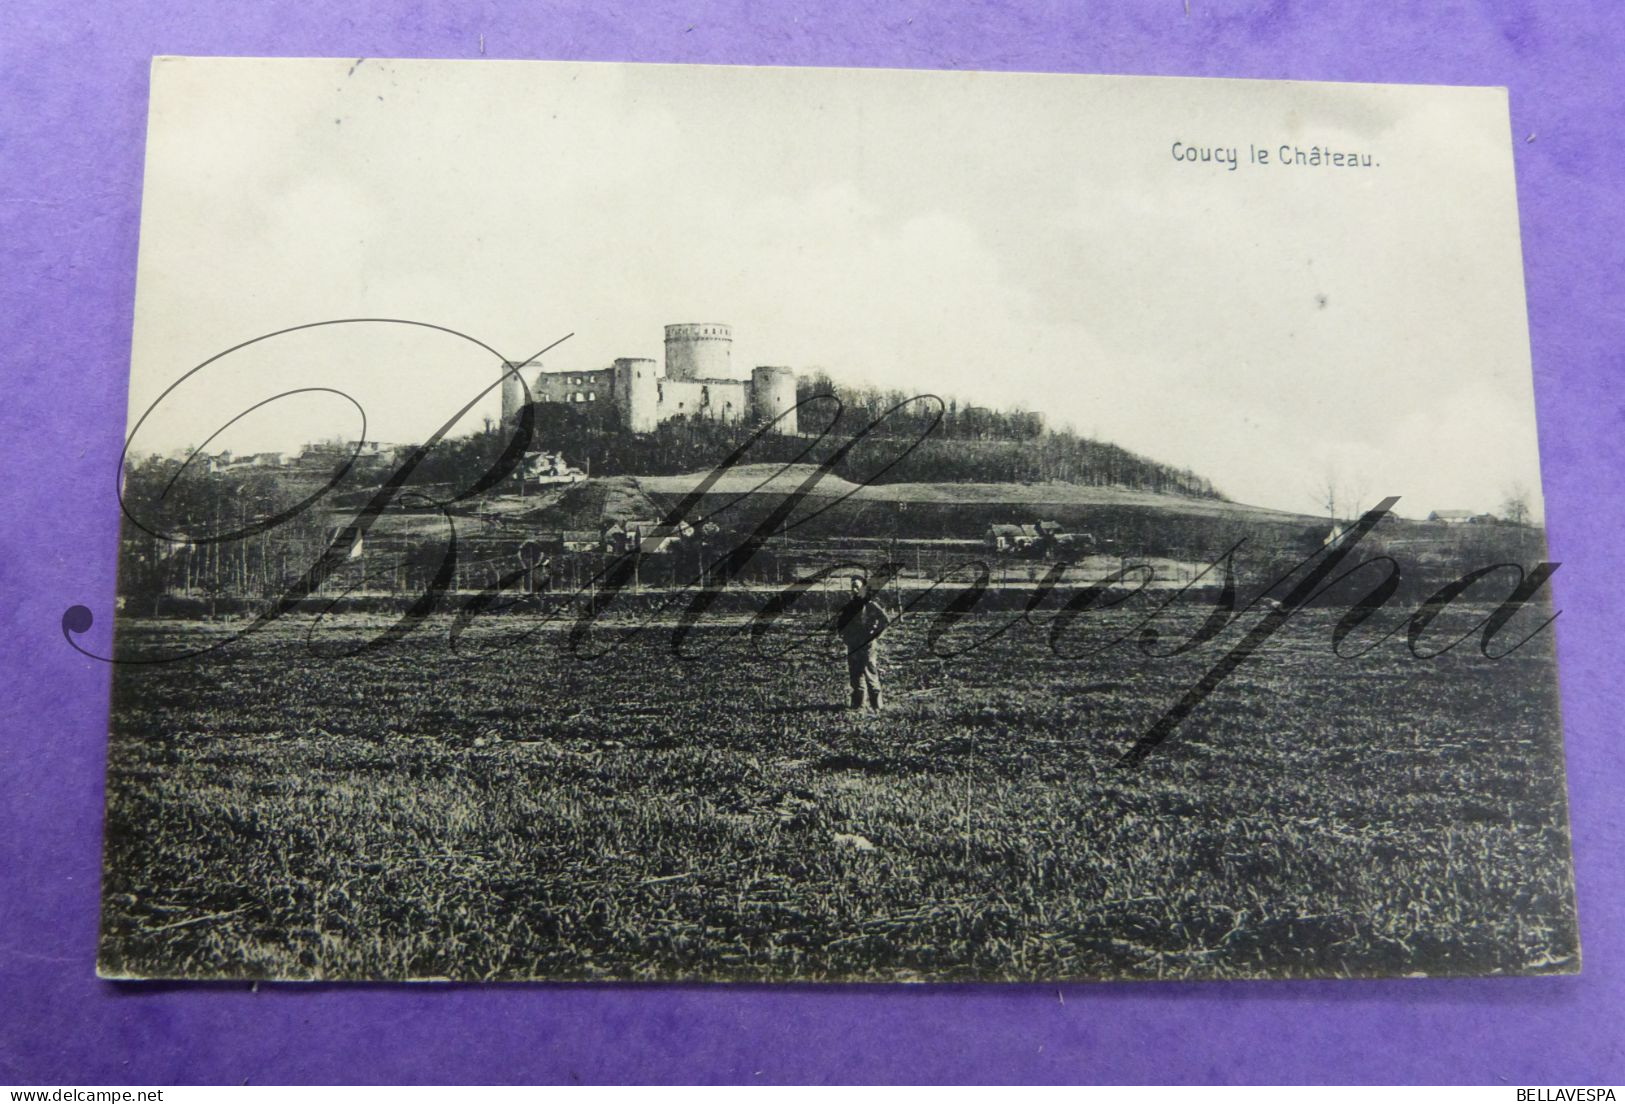 Coucy Chateau Feldpost Pulvermacher  Thüringen  France 1915  1914-18 -15 Inf. 8e REG. 4 Kompanie  15 Infanterie Division - War 1914-18